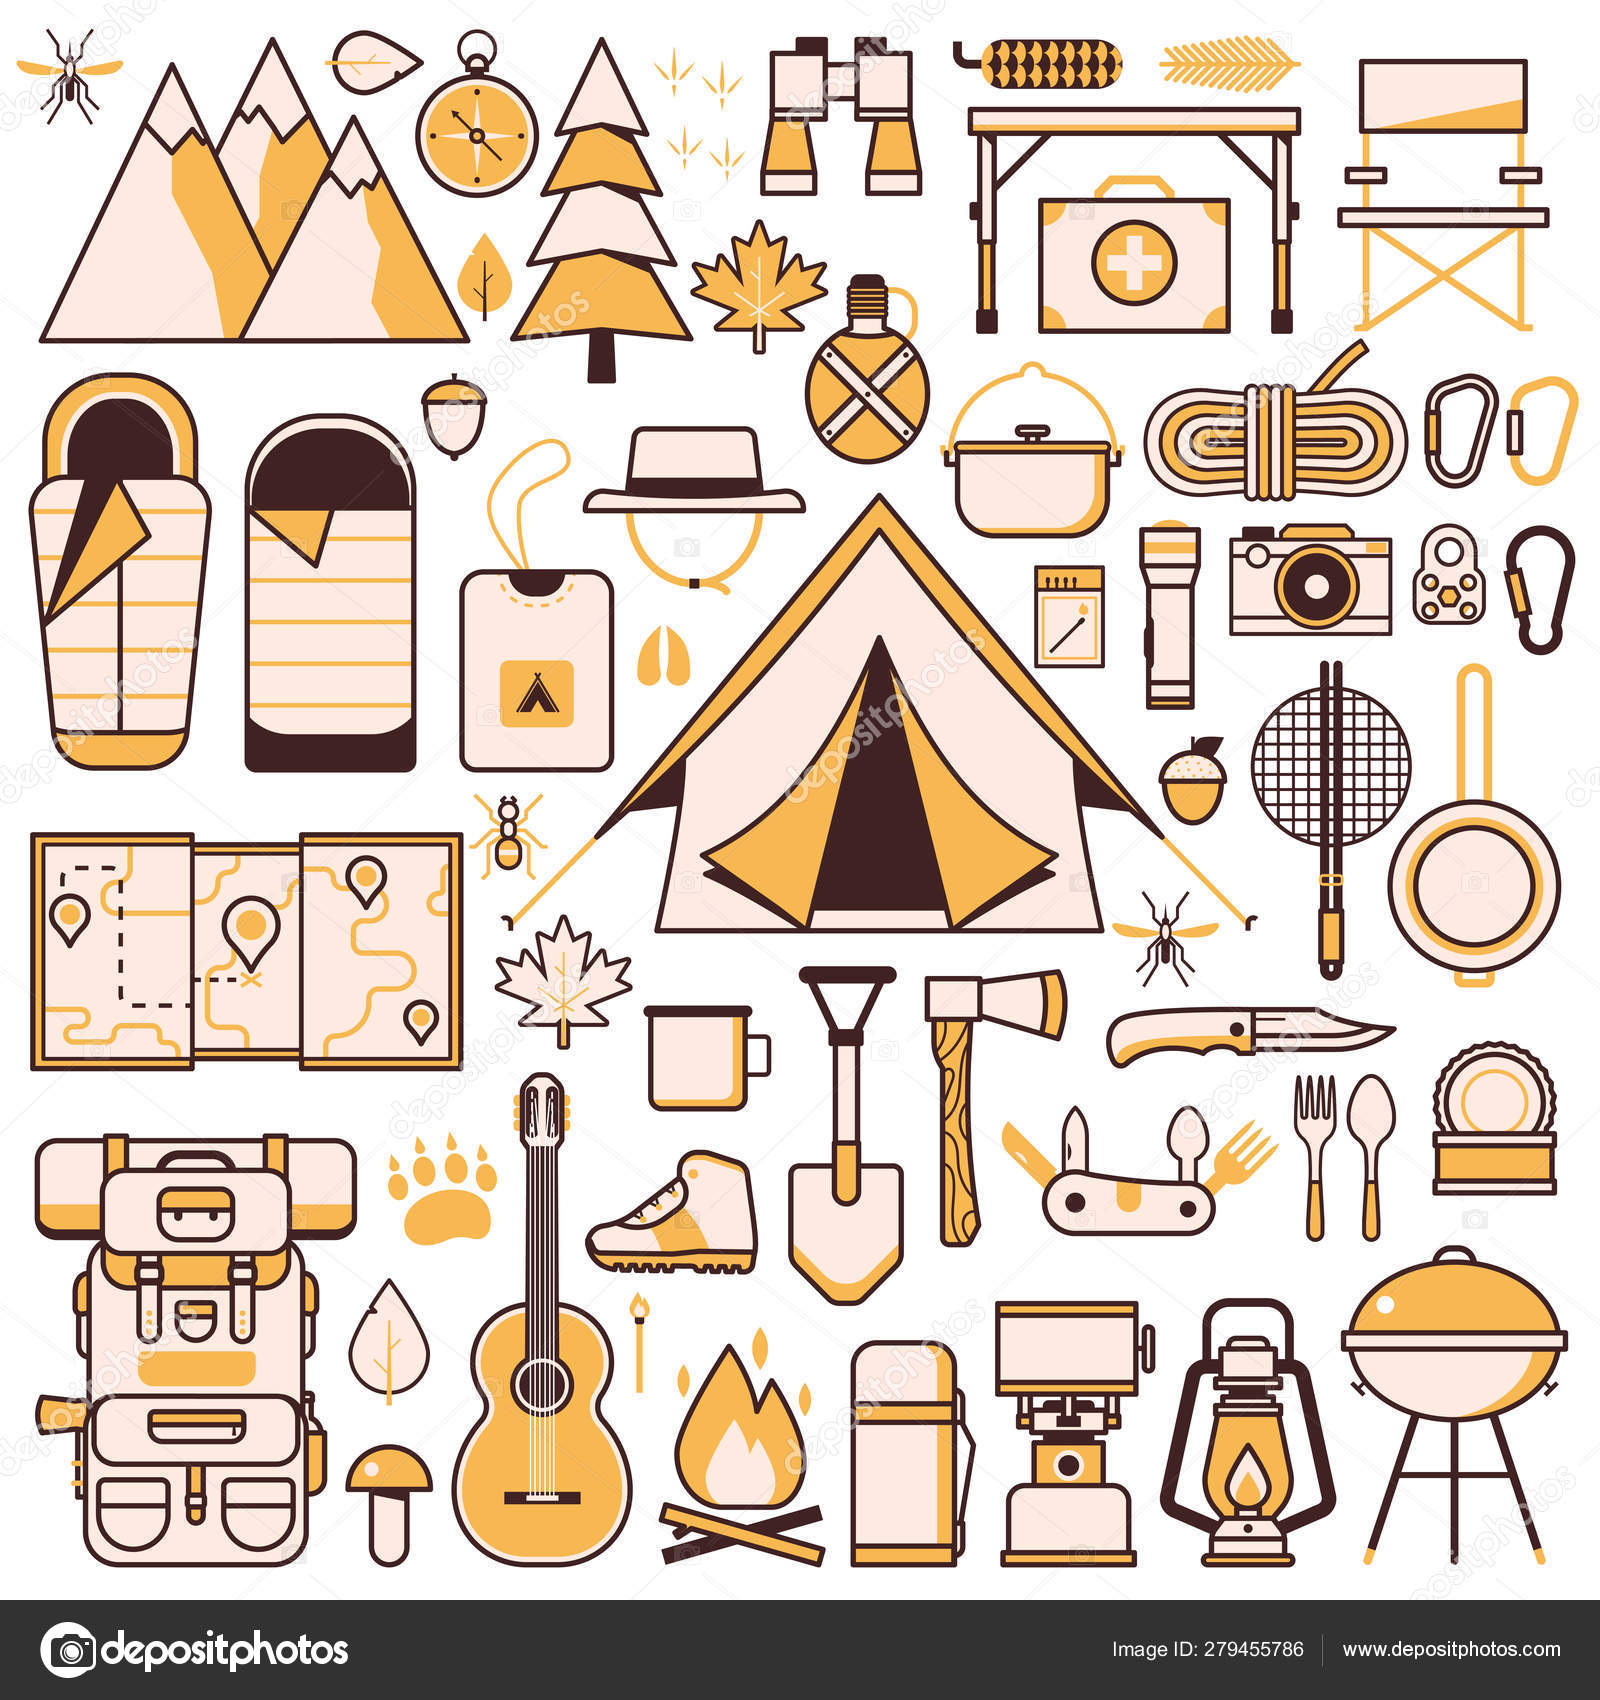 https://st4.depositphotos.com/7723892/27945/v/1600/depositphotos_279455786-stock-illustration-camping-and-hiking-equipment-design.jpg